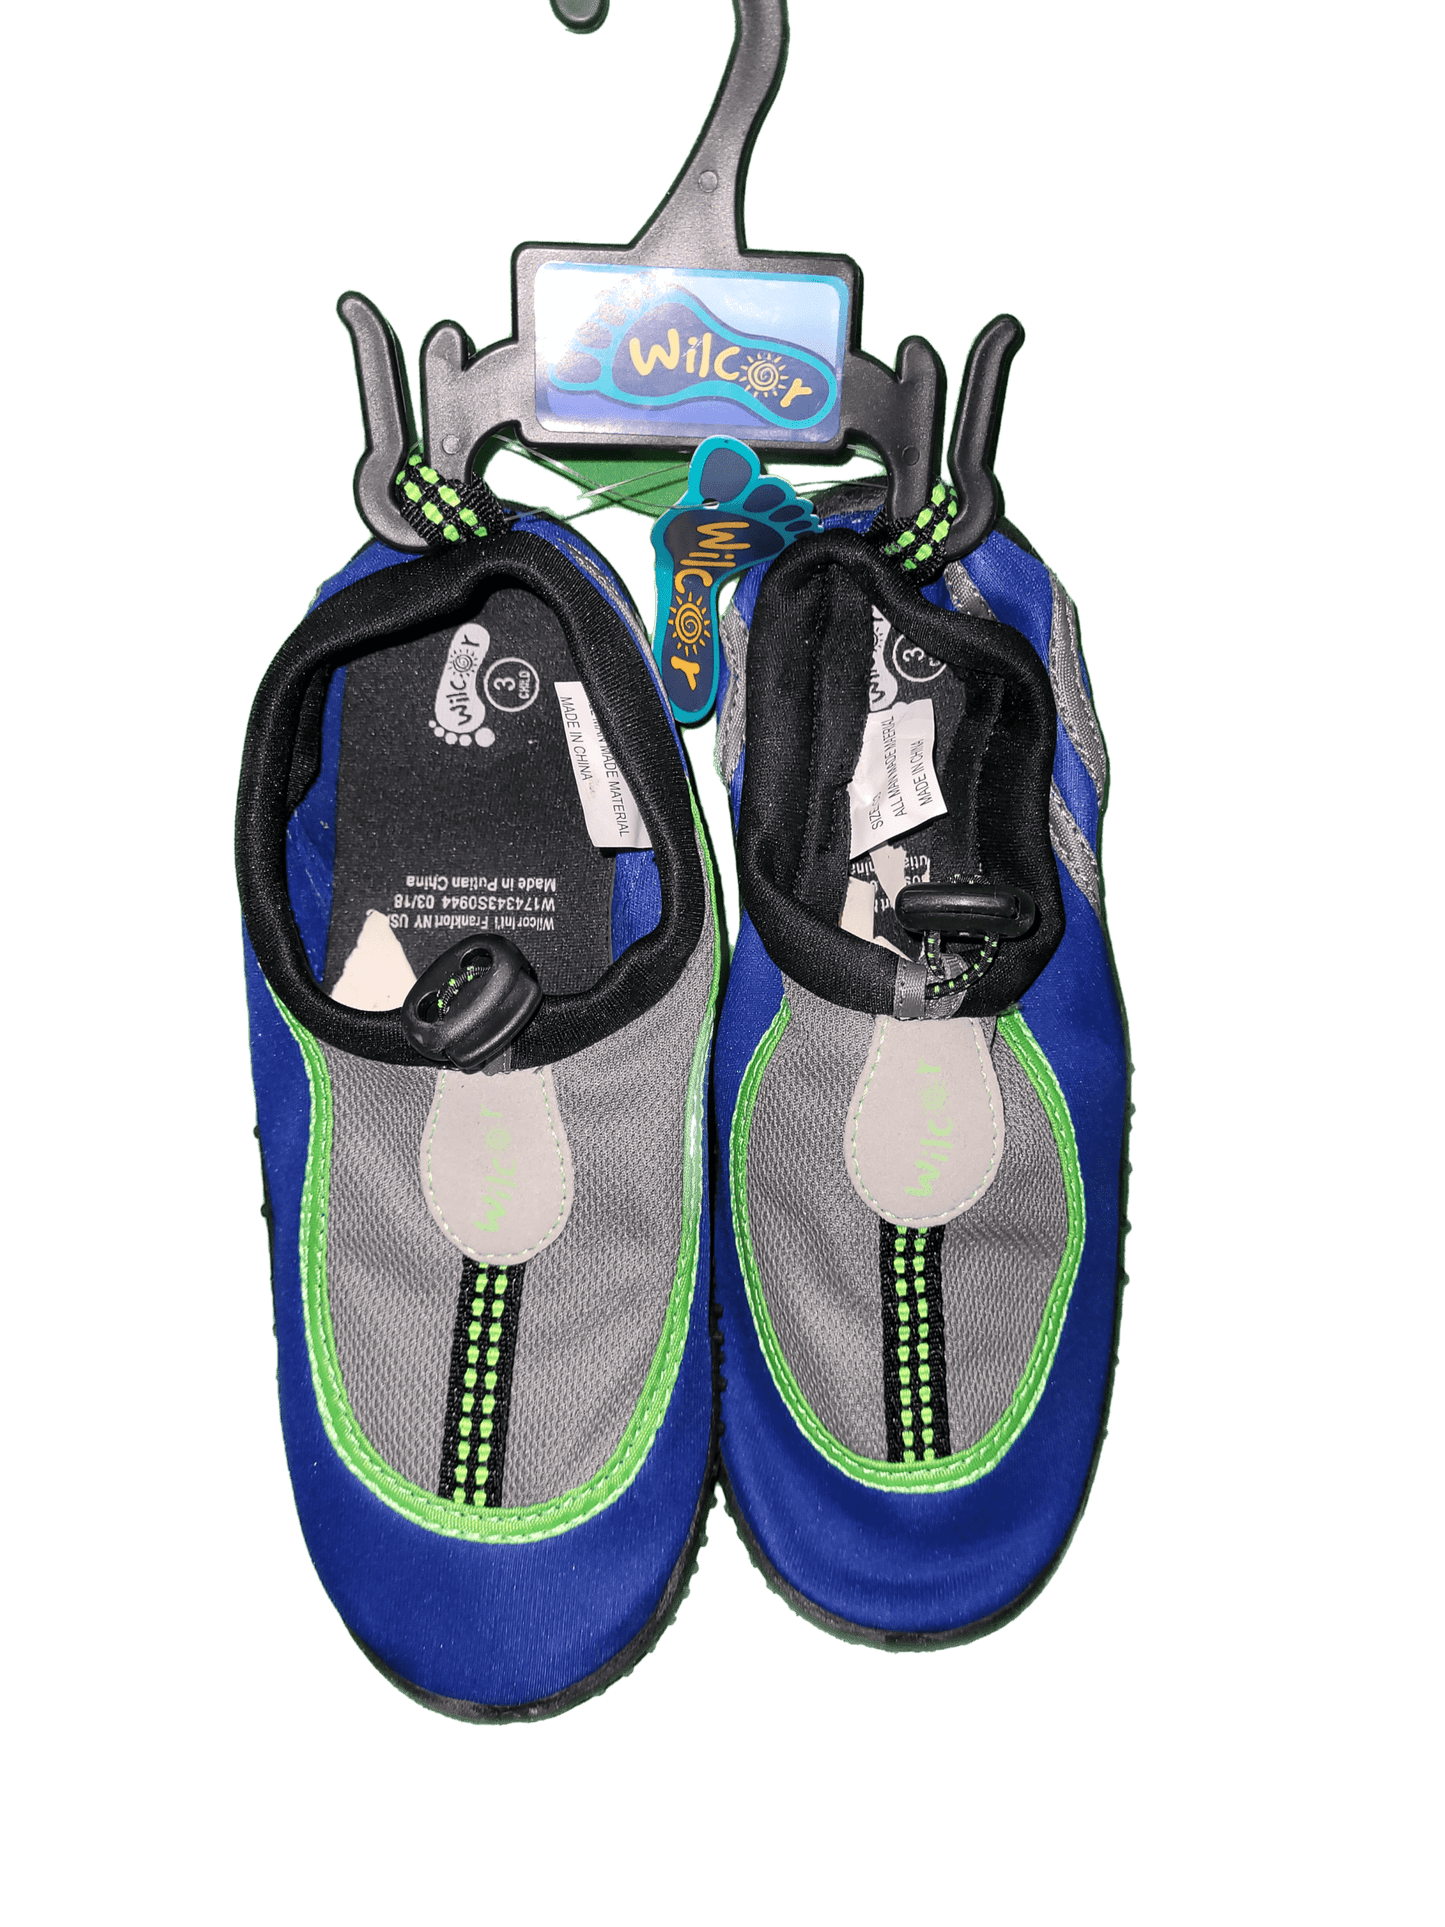 Wilcor Children's Aqua Shoes